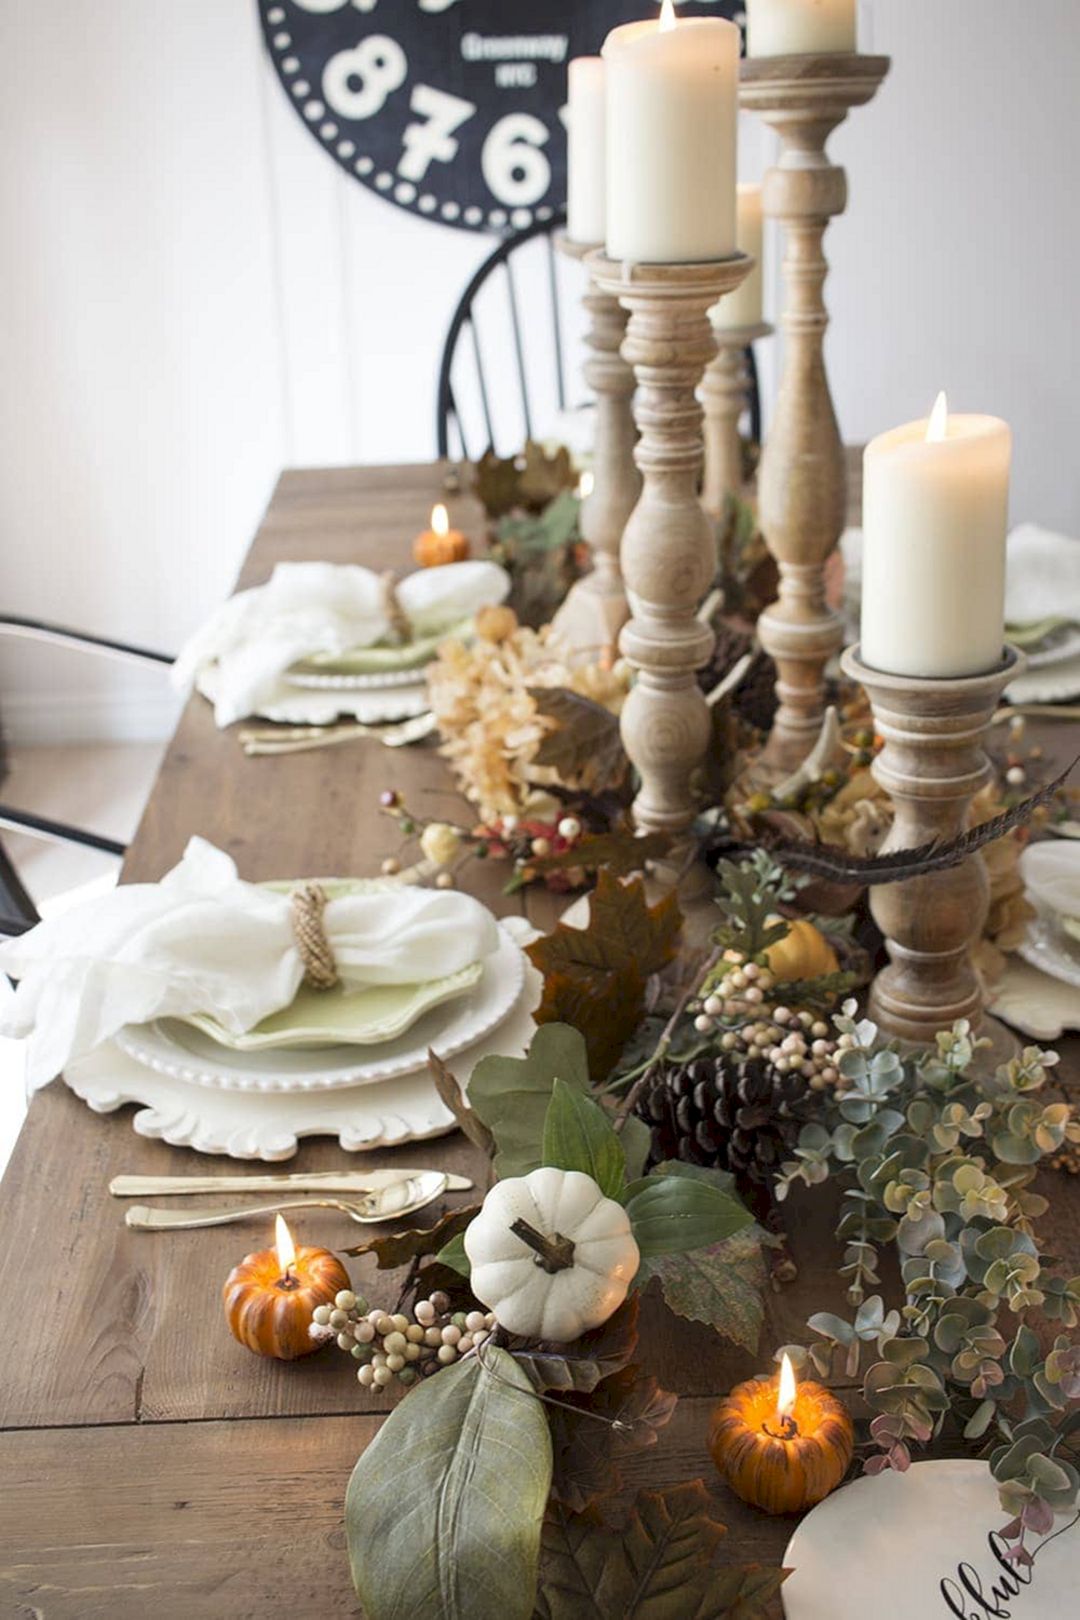 Table Decor For Thanksgiving From Joyfullygrowingblog